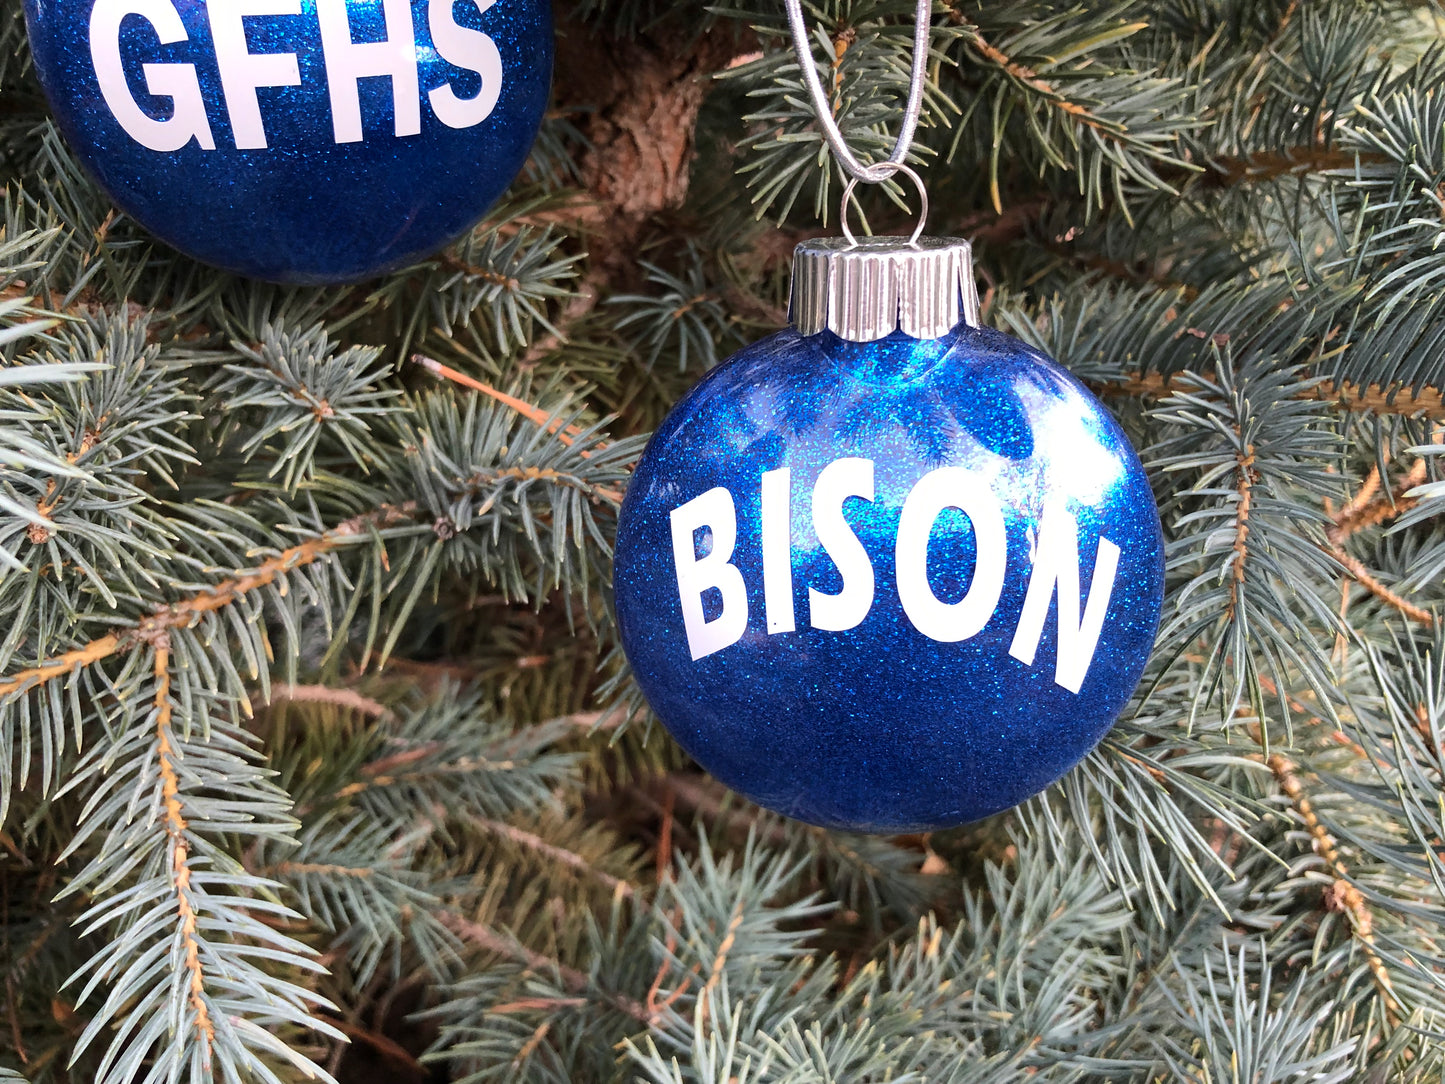 GFHS Great Falls High School Bison ornament set